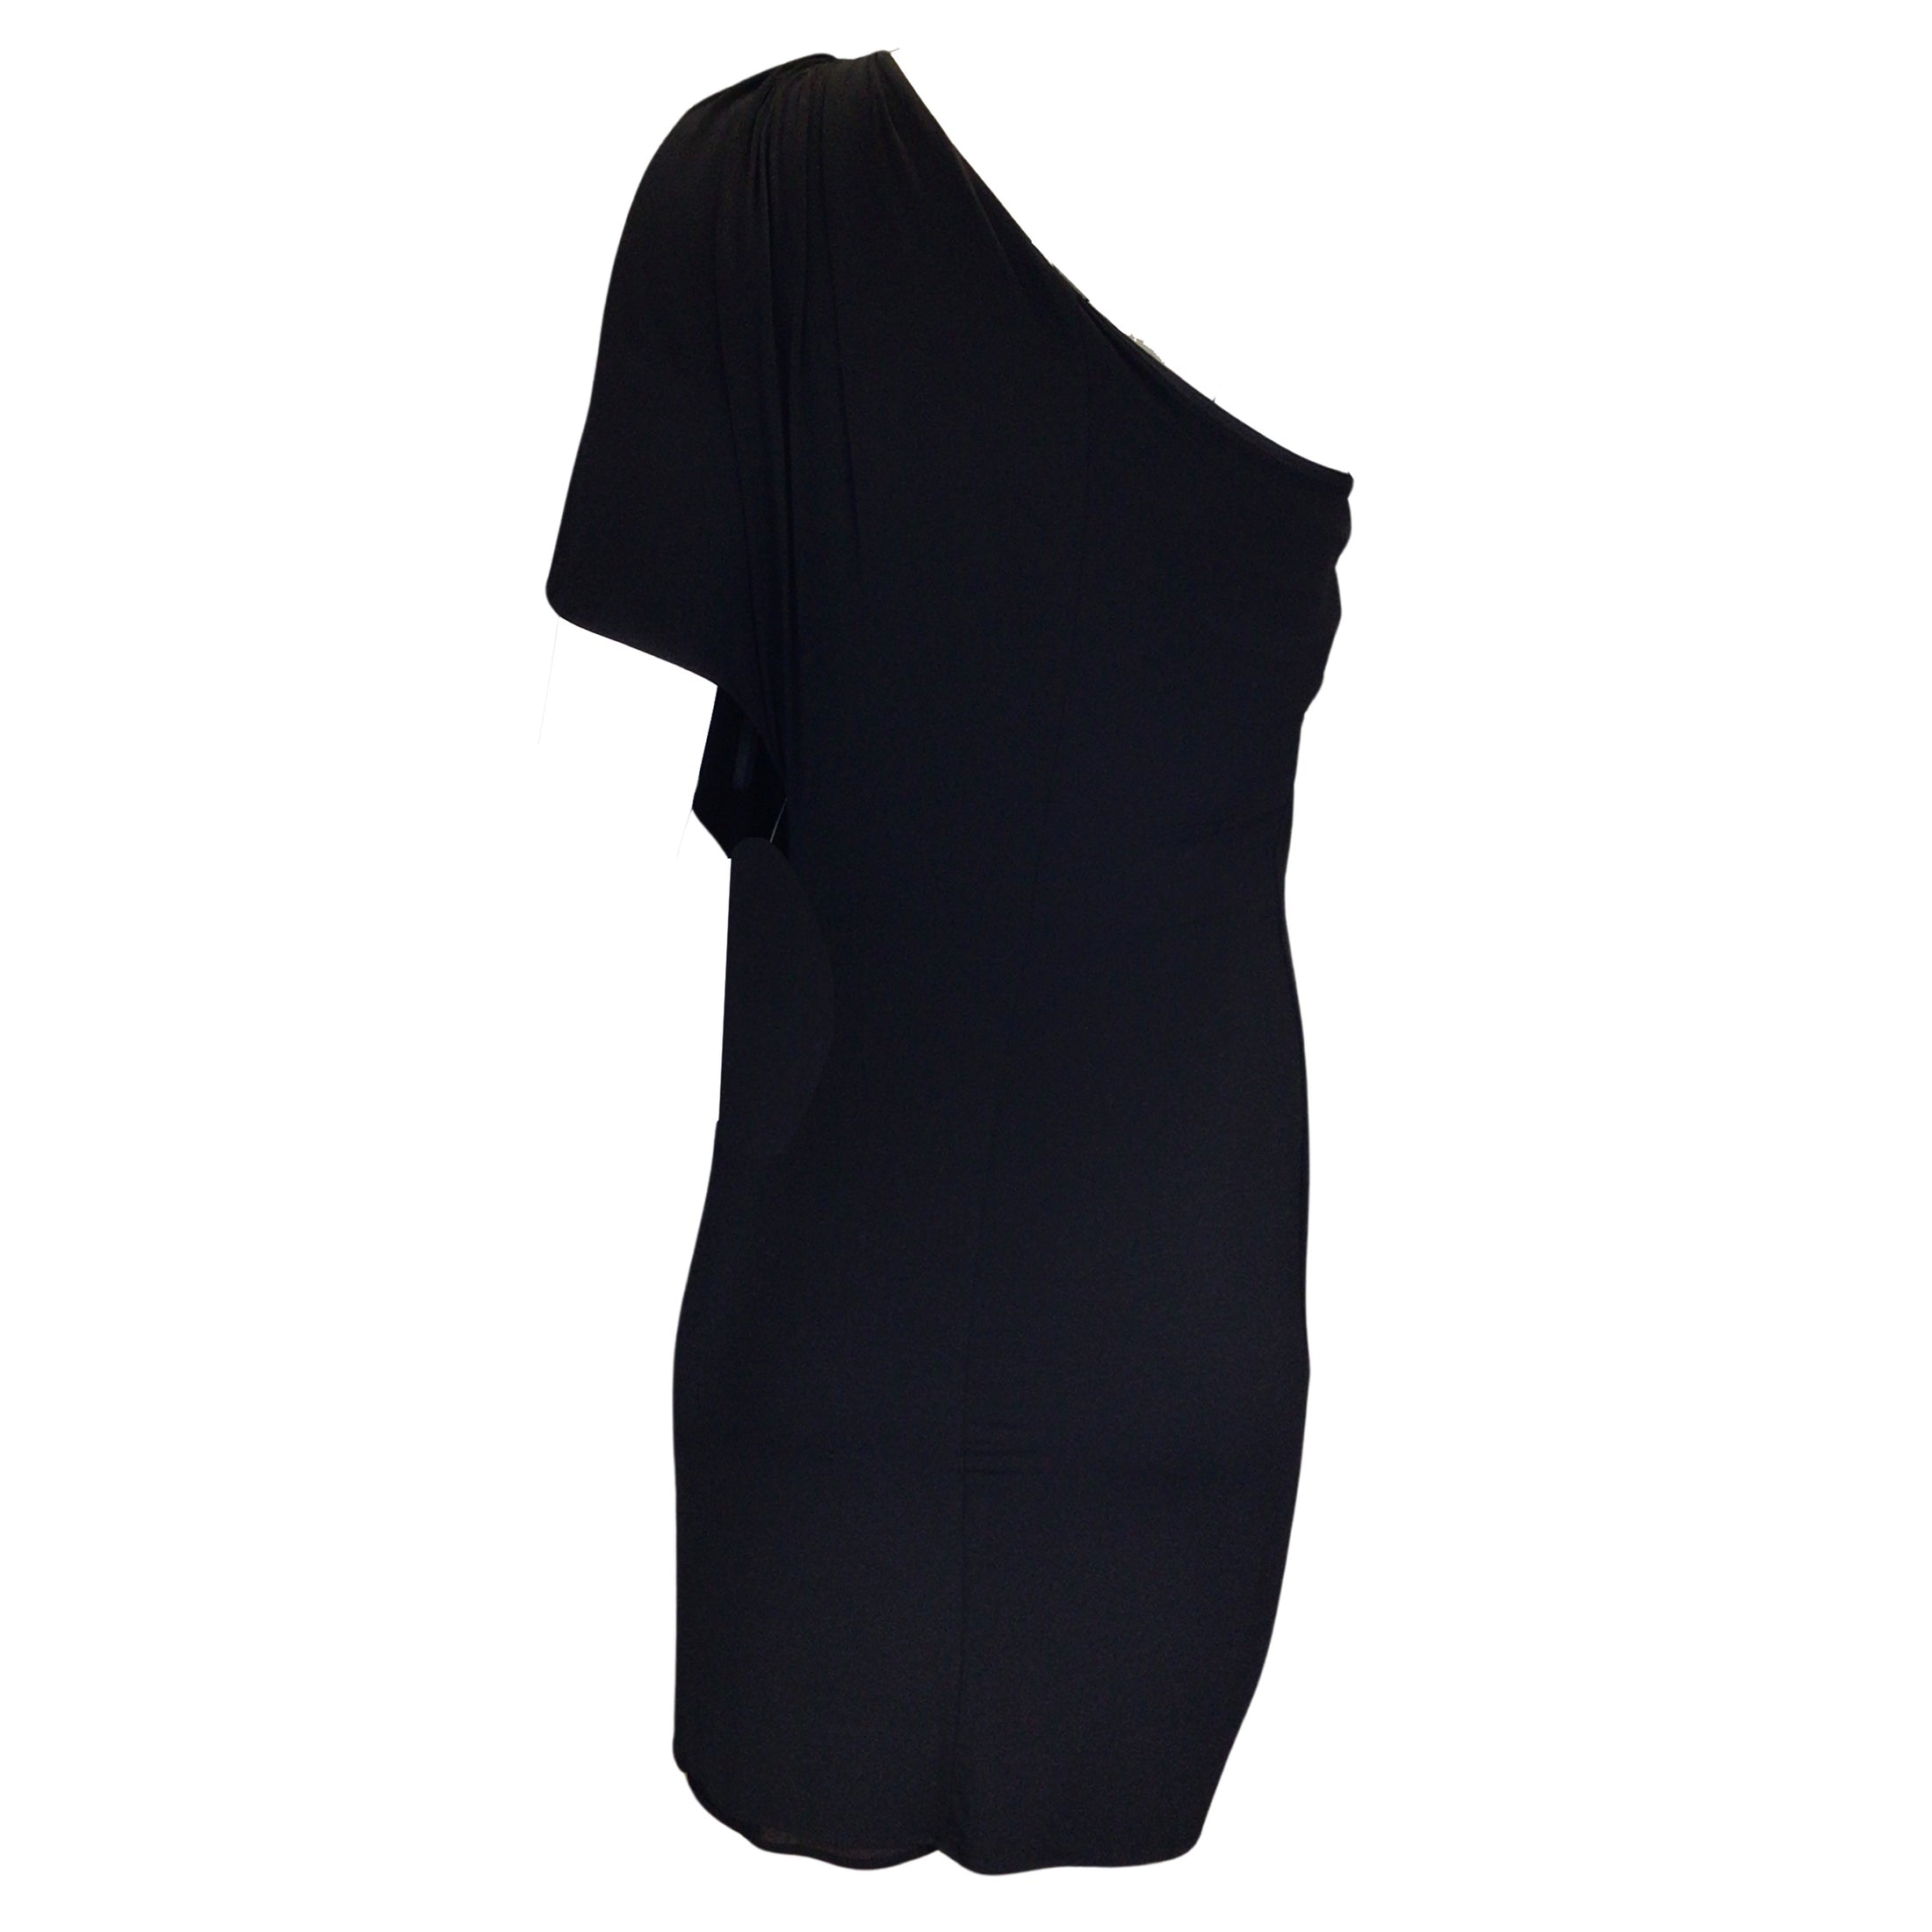 Roberto Cavalli Black Rhinestone Embellished One Shoulder Jersey Dress